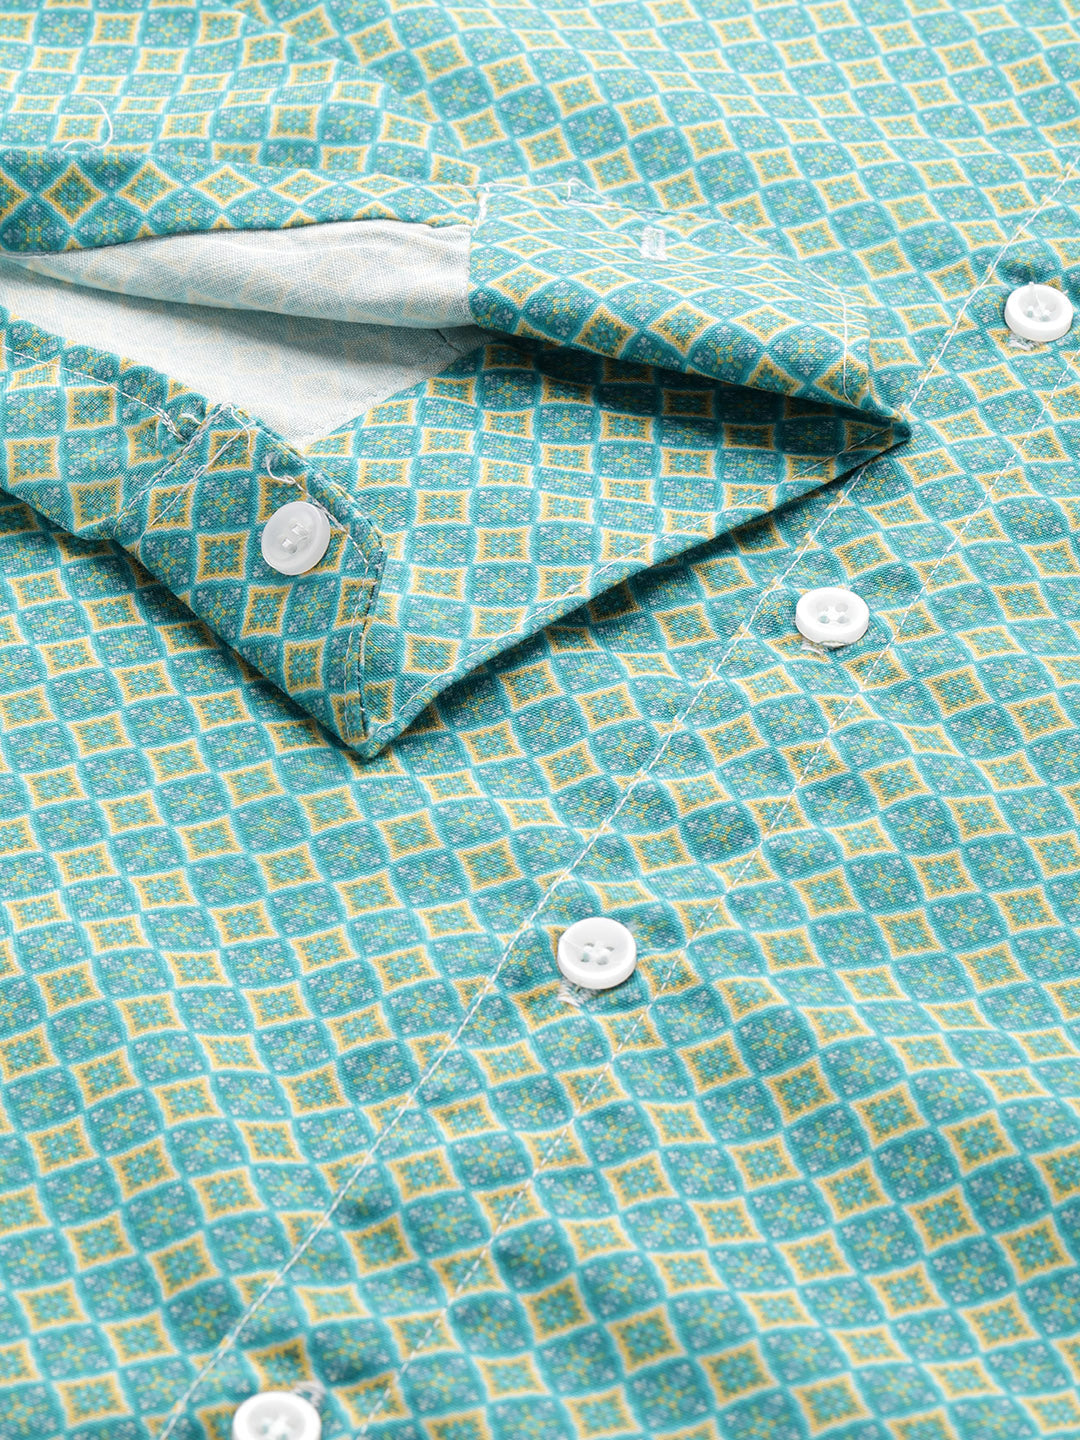 Luxrio Men's Printed Mandarin Collared Full Sleeves Casual Shirt